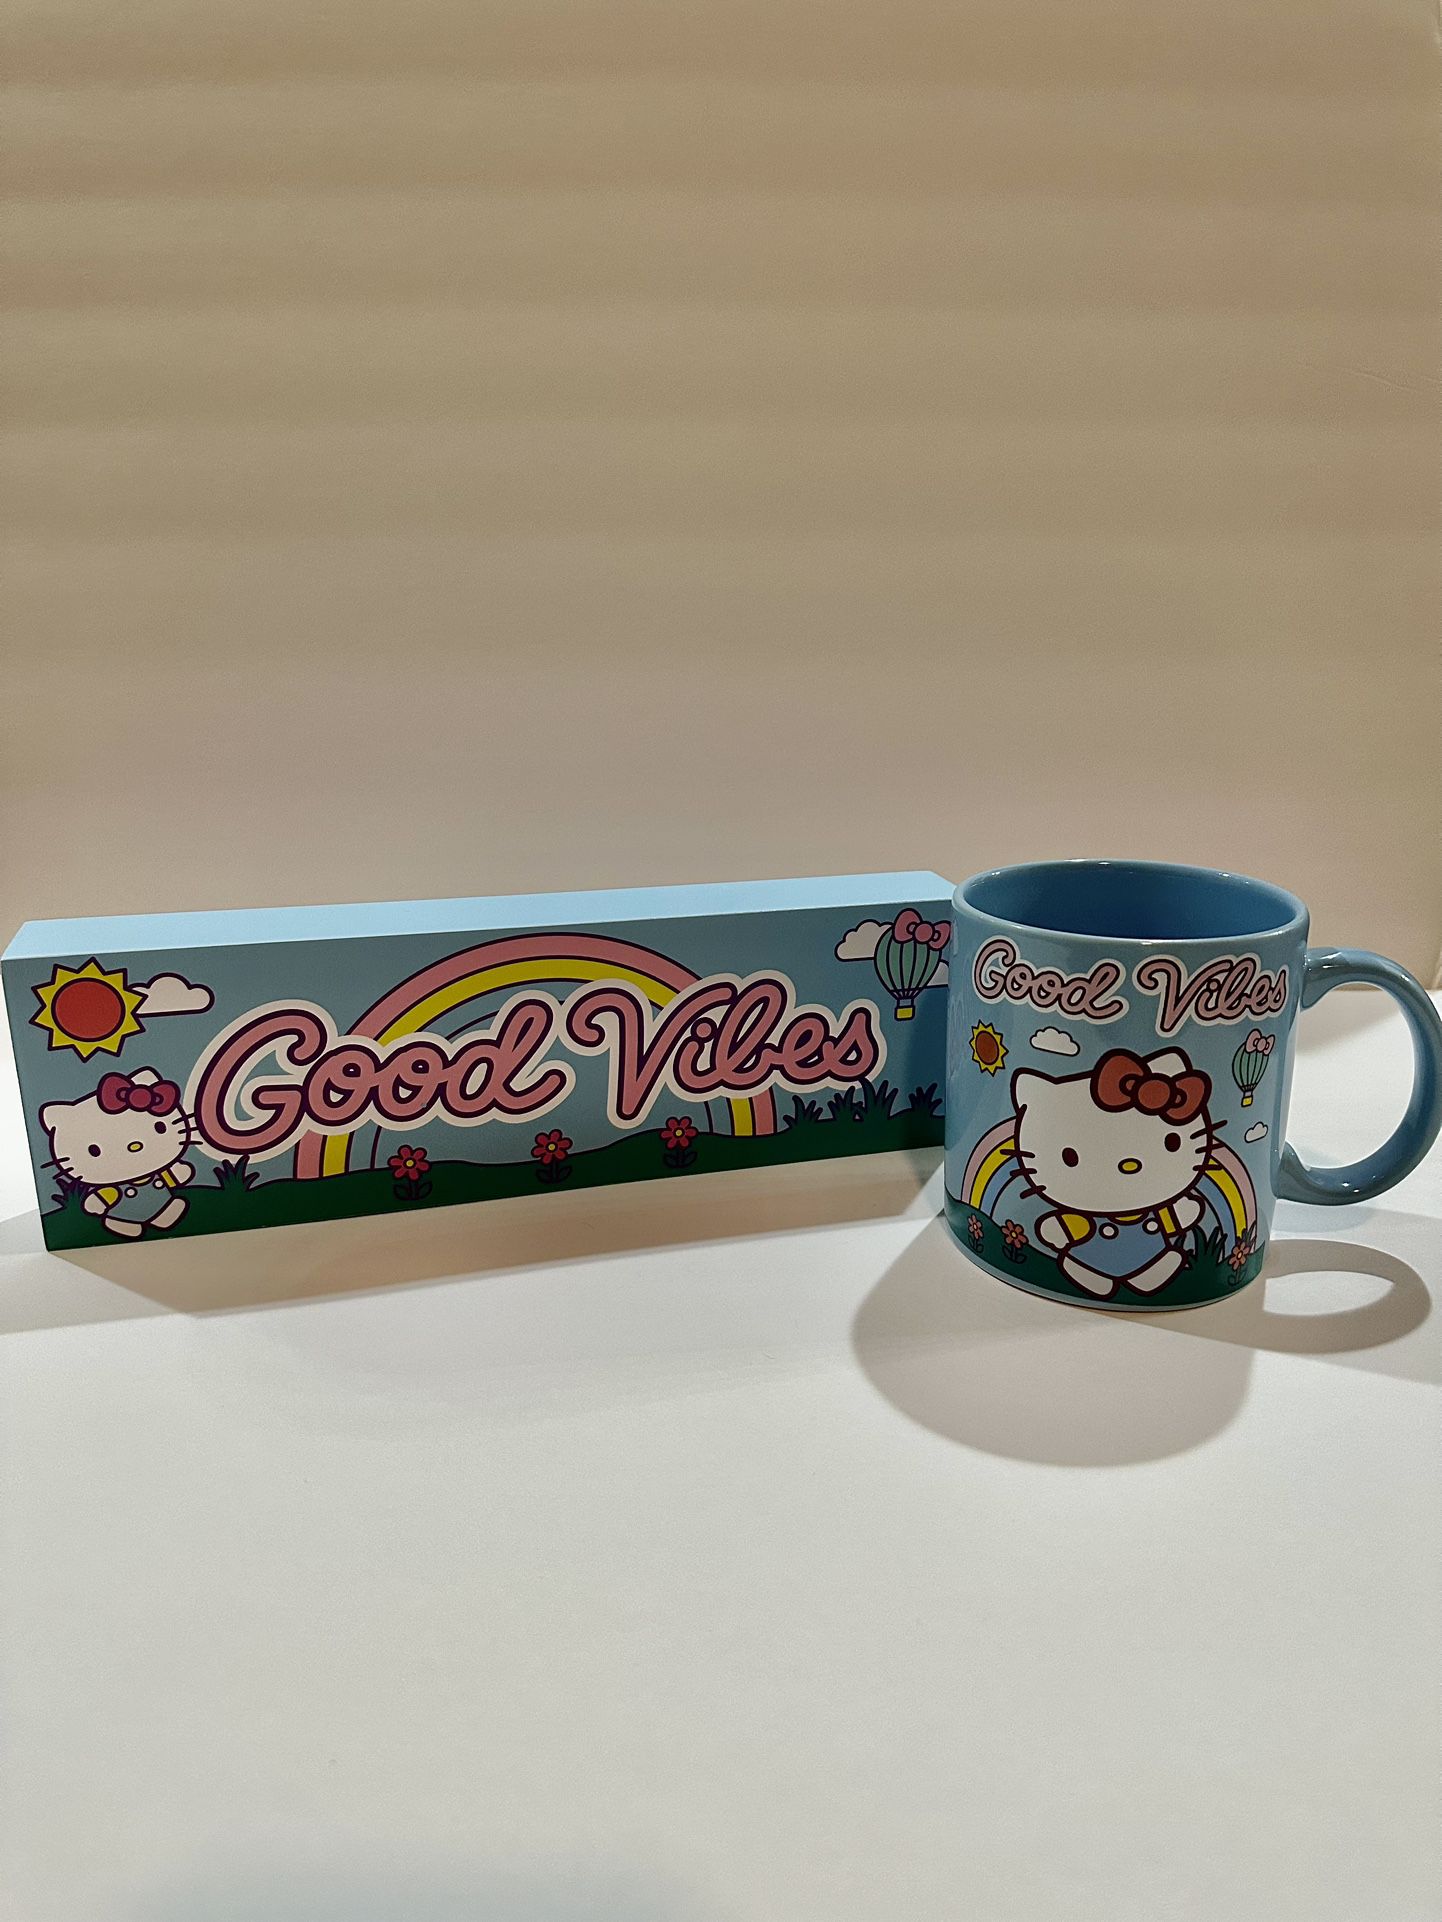 Hello Kitty Good Vibes Decor & Mug / Easter Gift Idea 